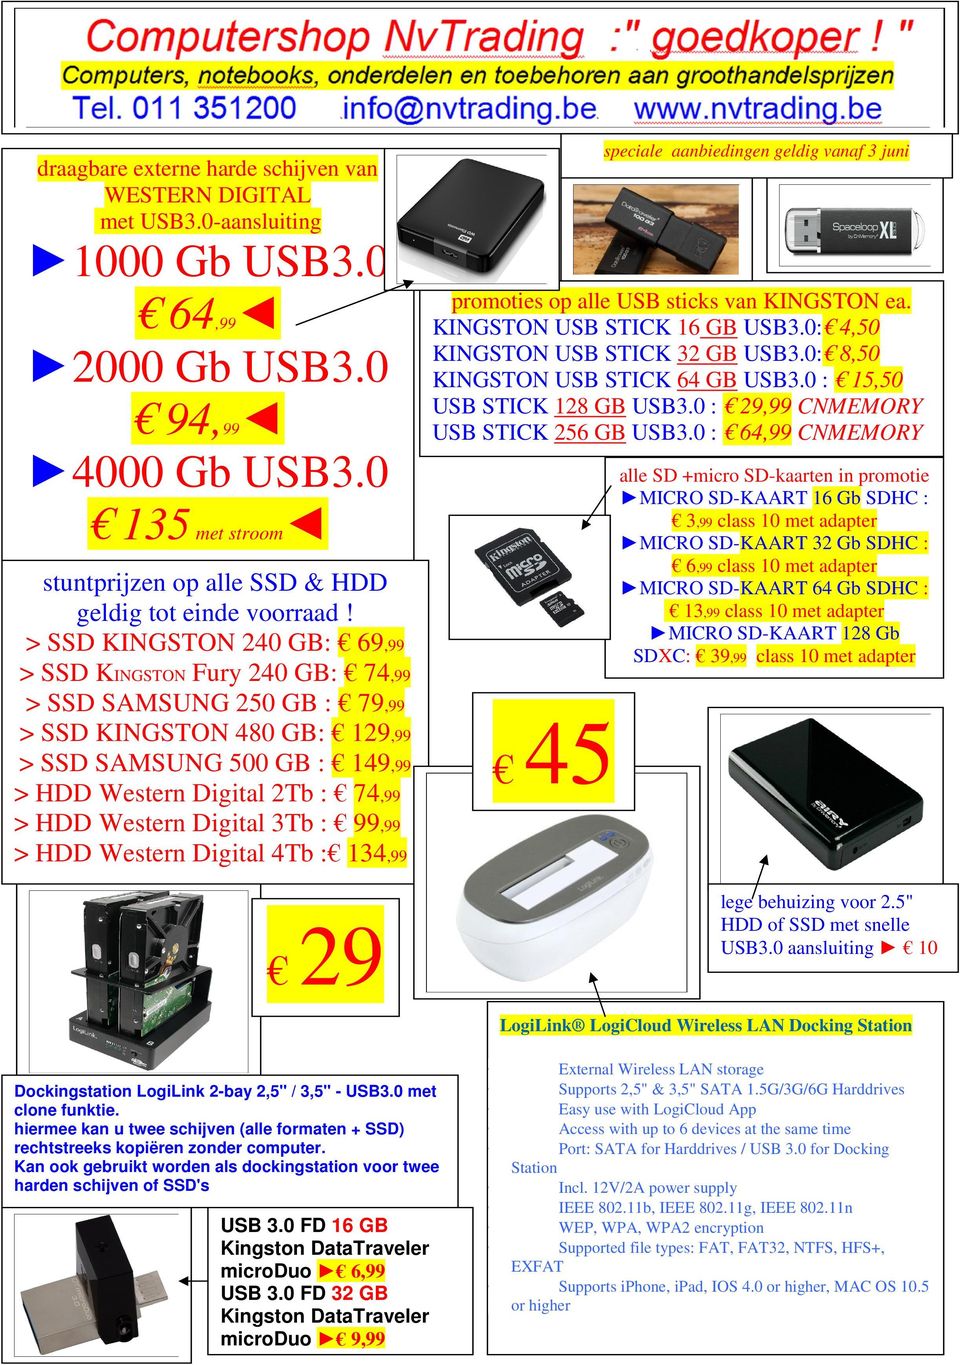 > SSD KINGSTON 240 GB: 69,99 > SSD KINGSTON Fury 240 GB: 74,99 > SSD SAMSUNG 250 GB : 79,99 > SSD KINGSTON 480 GB: 129,99 > SSD SAMSUNG 500 GB : 149,99 > HDD Western Digital 2Tb : 74,99 > HDD Western